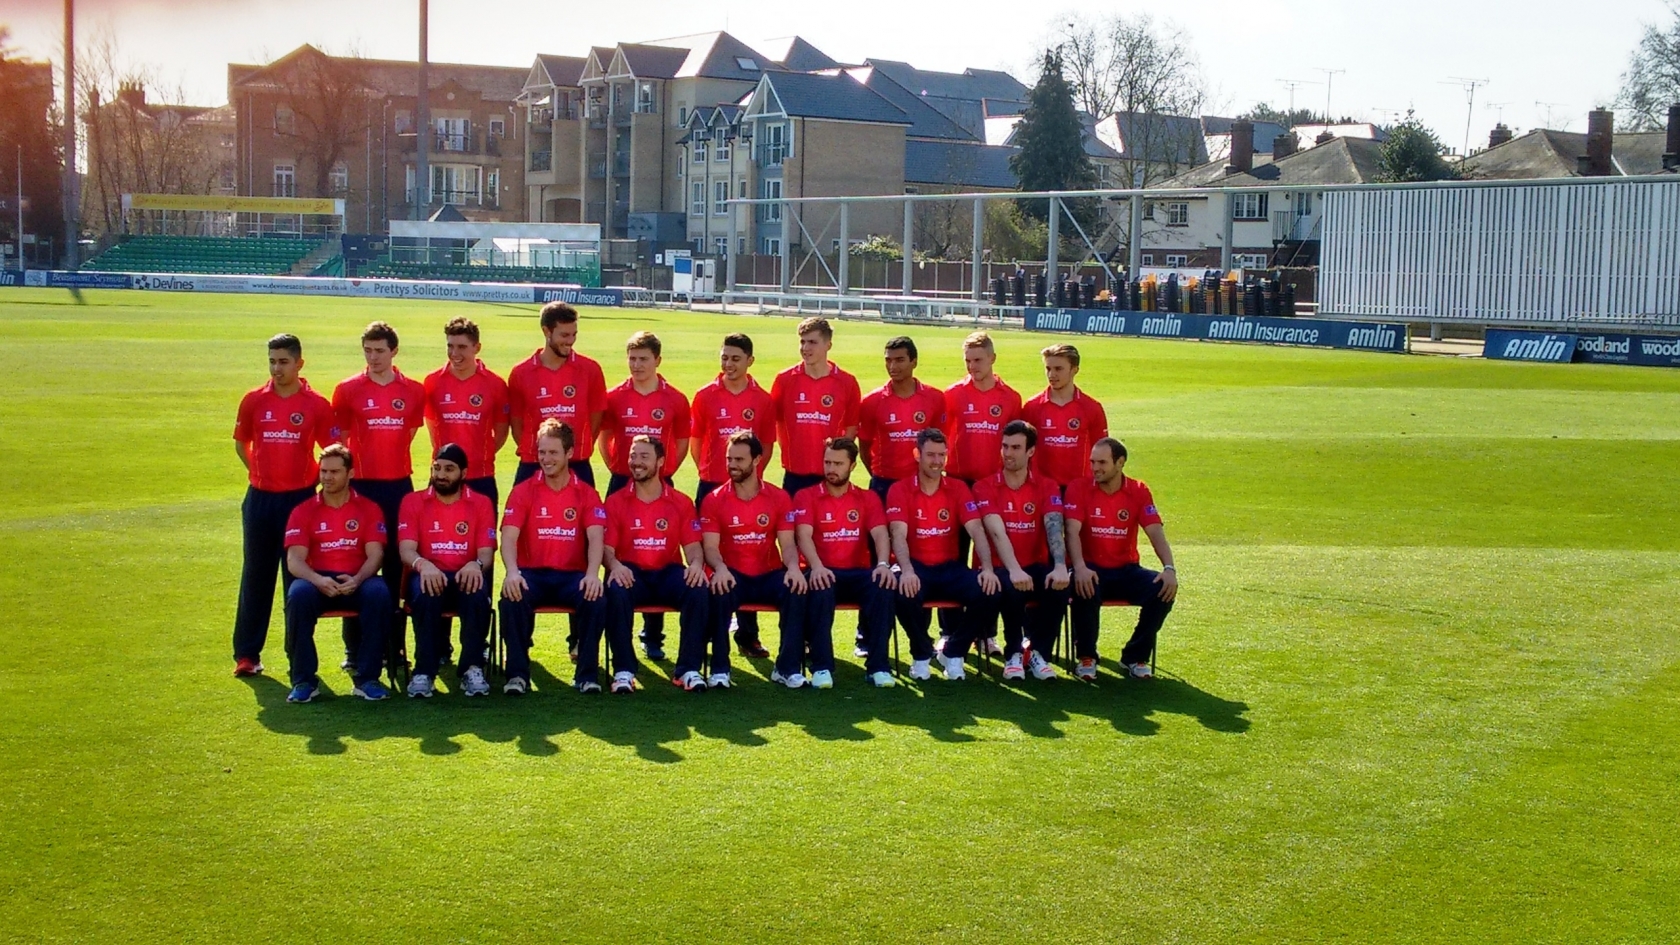 Essex Cricket Squad for 1680 x 945 HDTV resolution